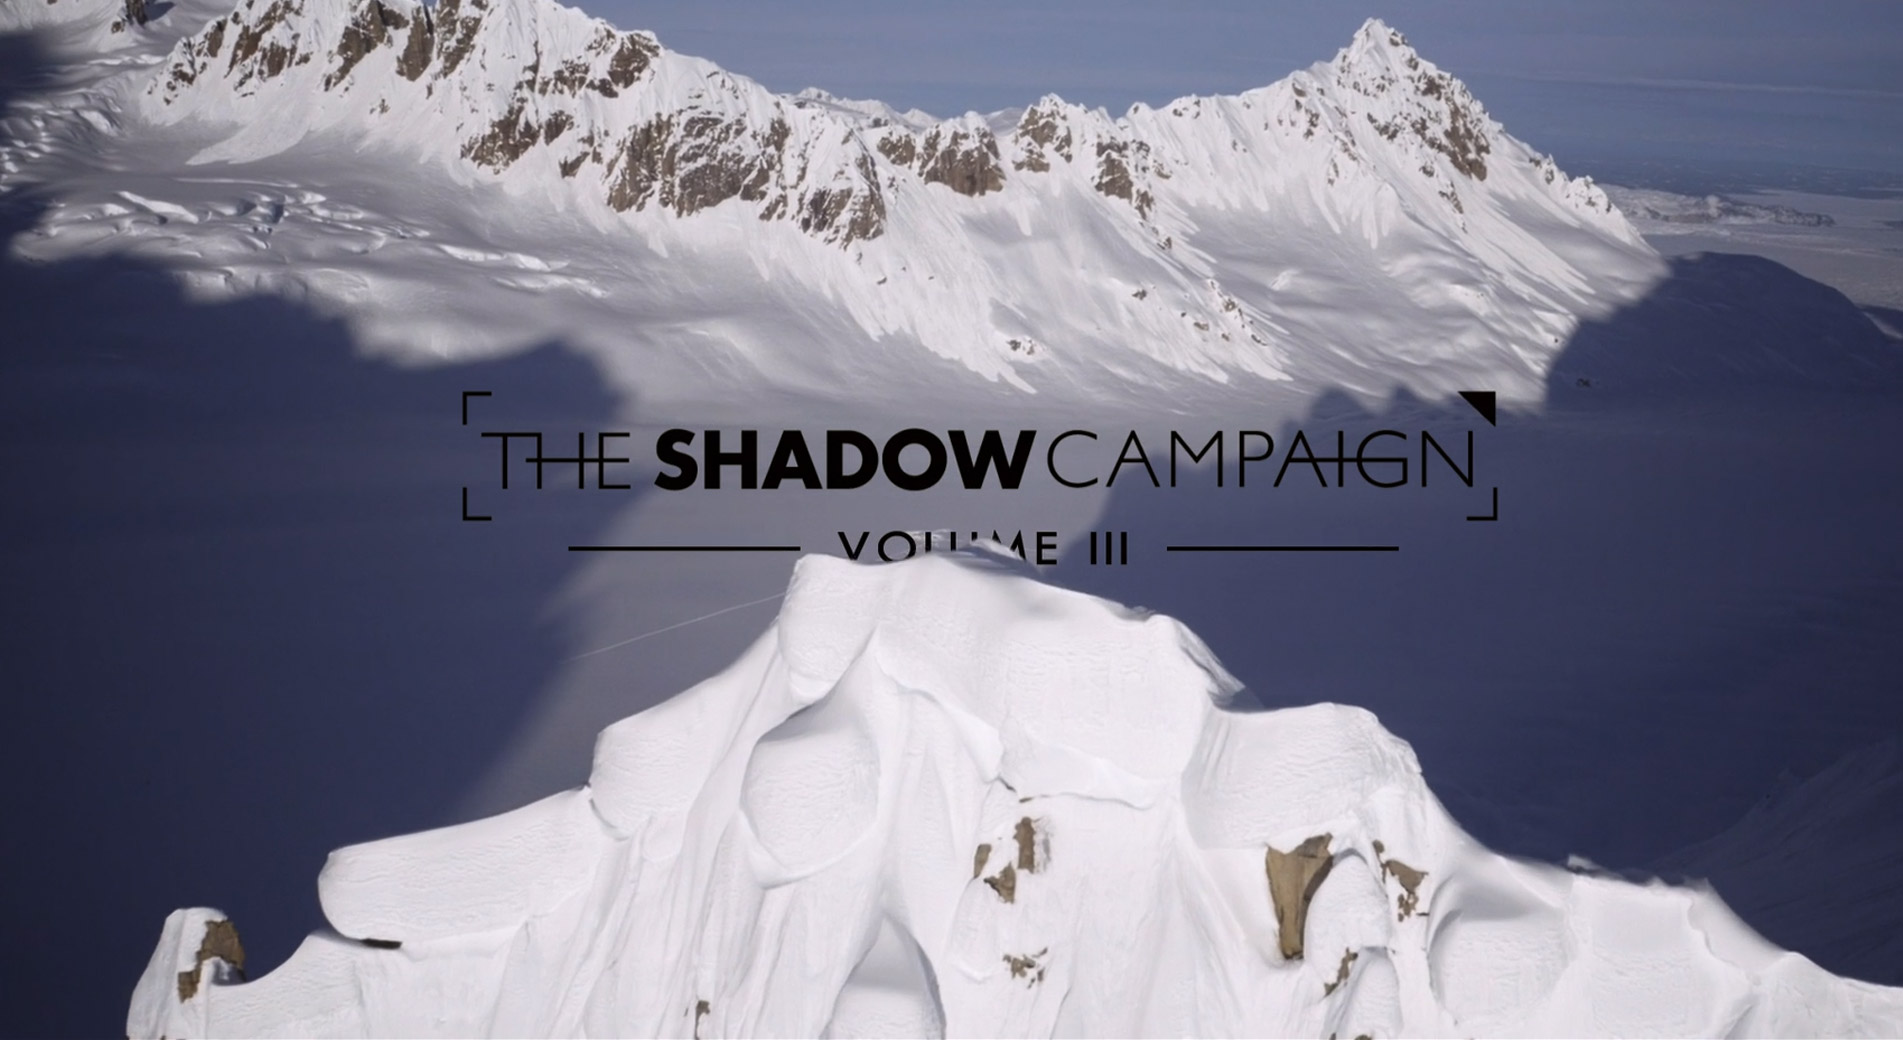 The Shadow Campaign Volume III Sturgefilm DPS Cinematic